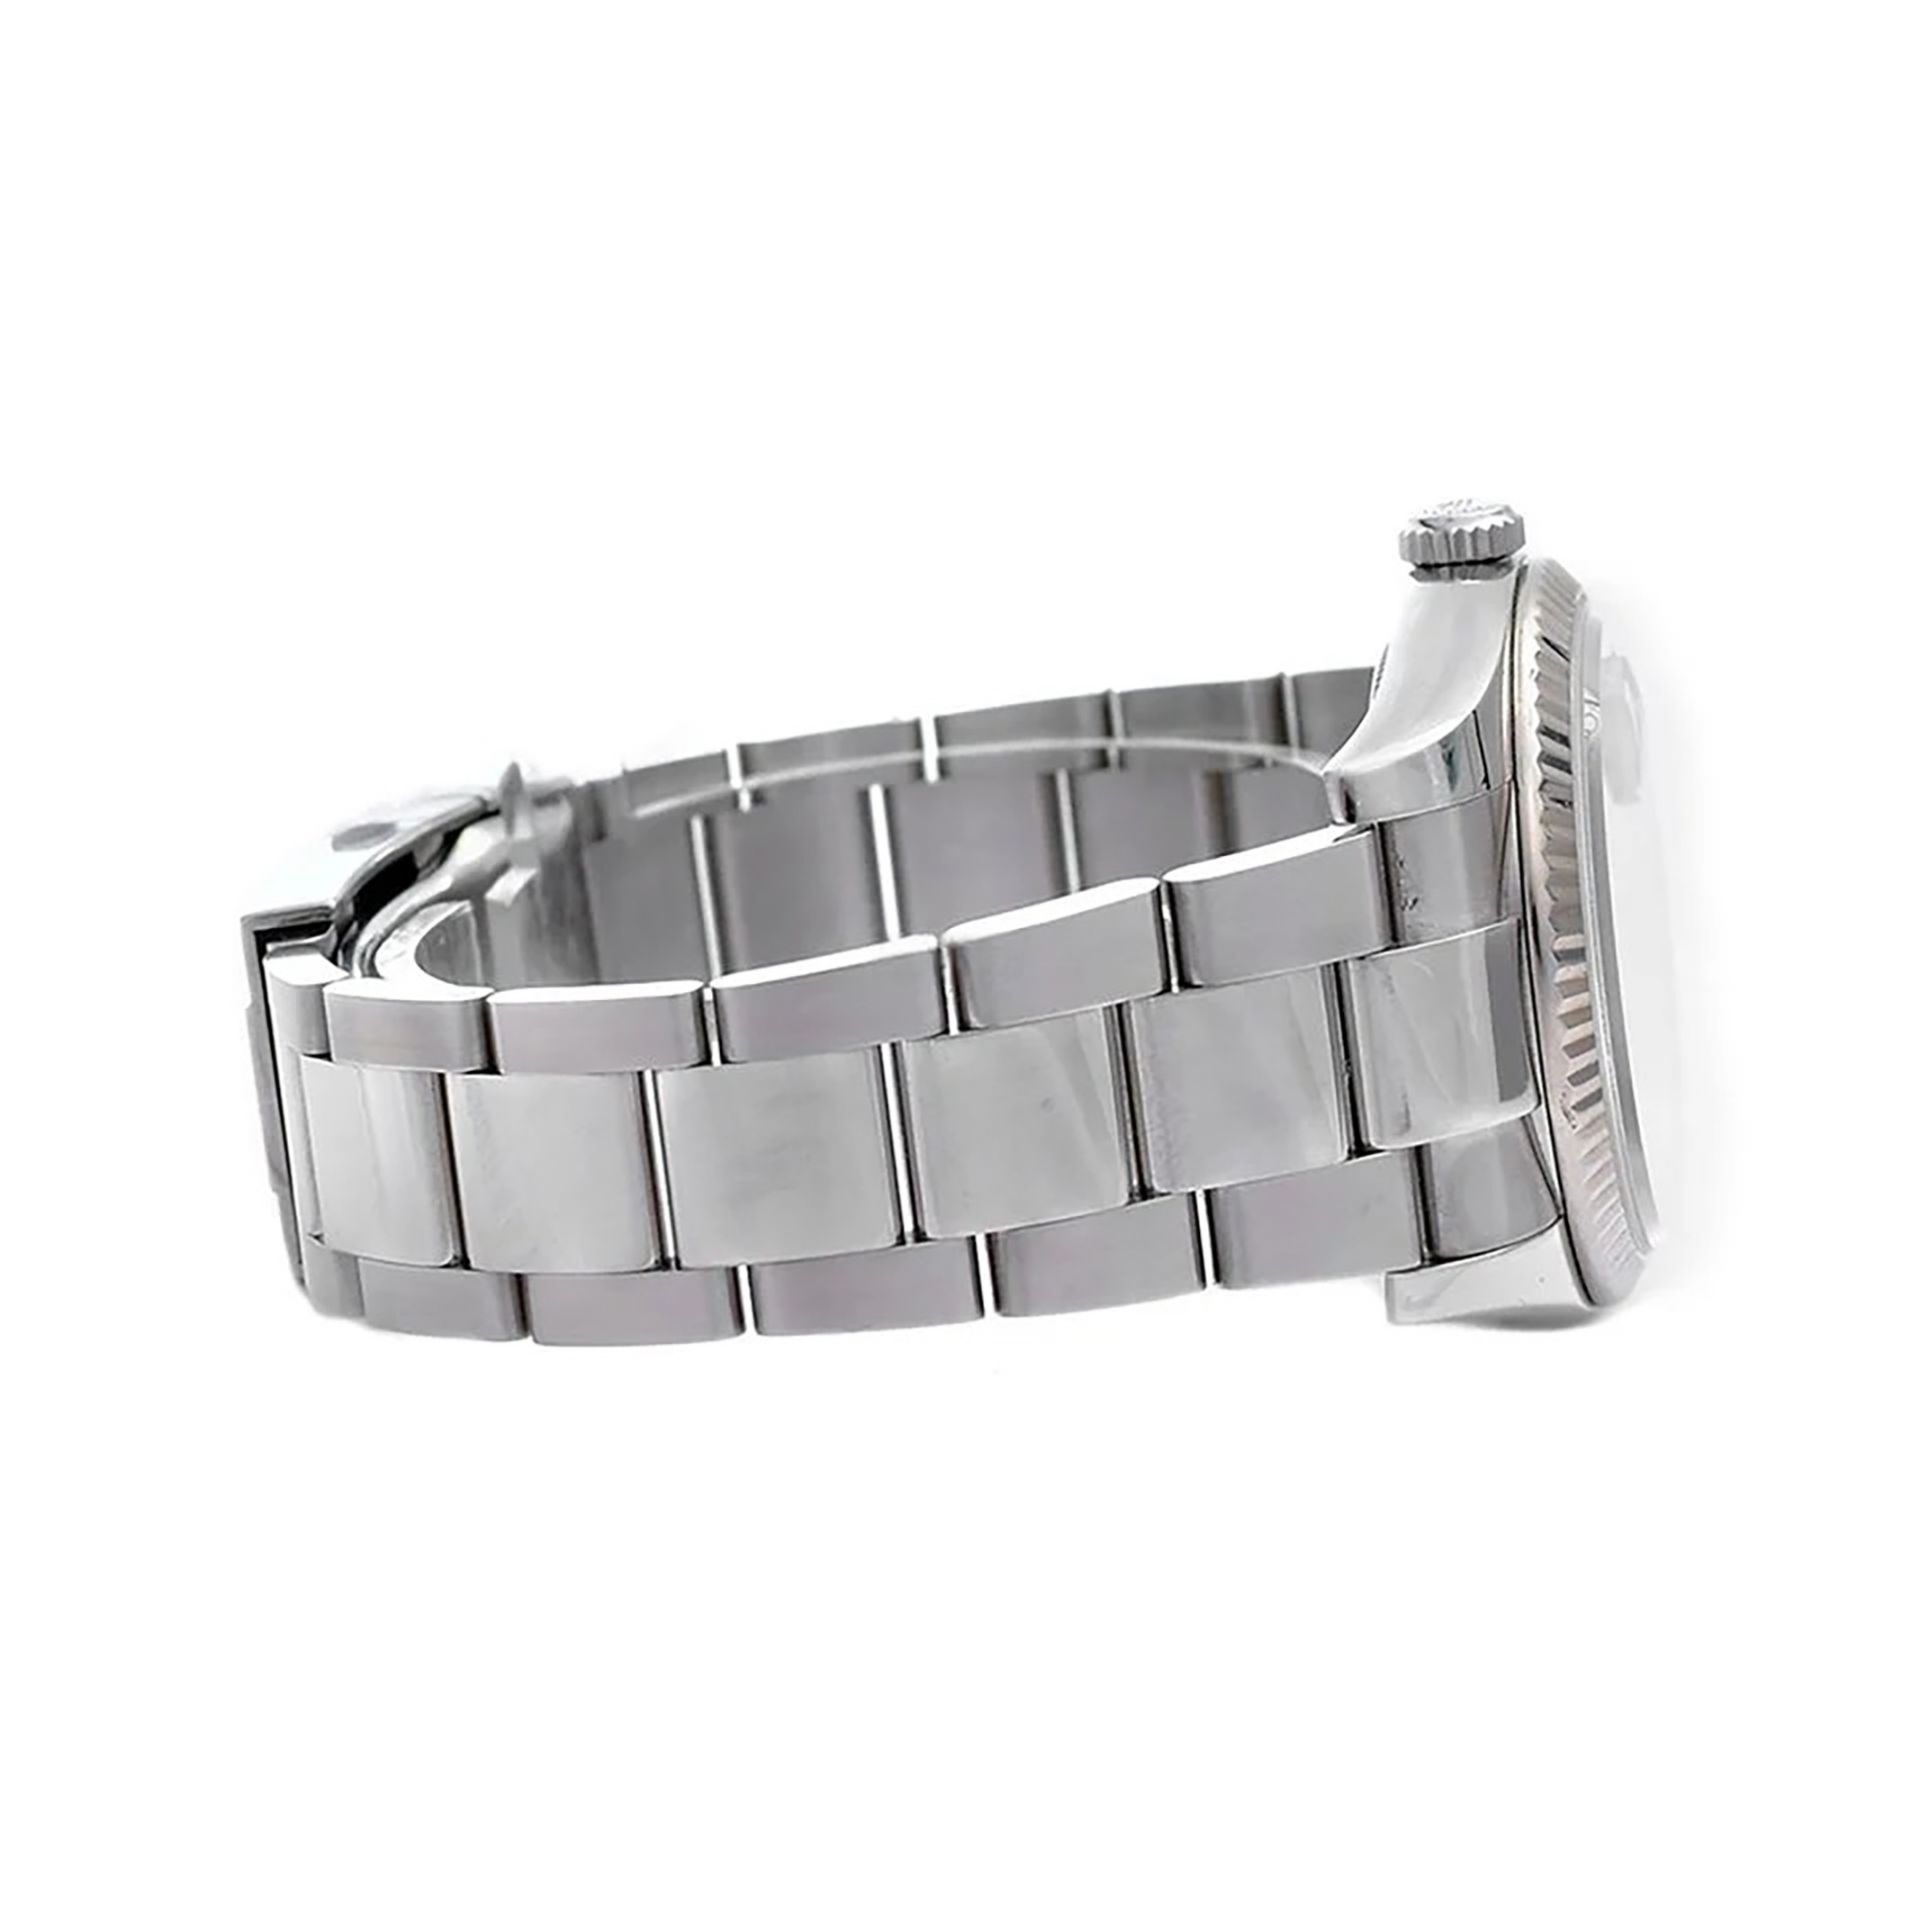 Rolex Datejust 36 wristwatch, in steel - Image 5 of 5